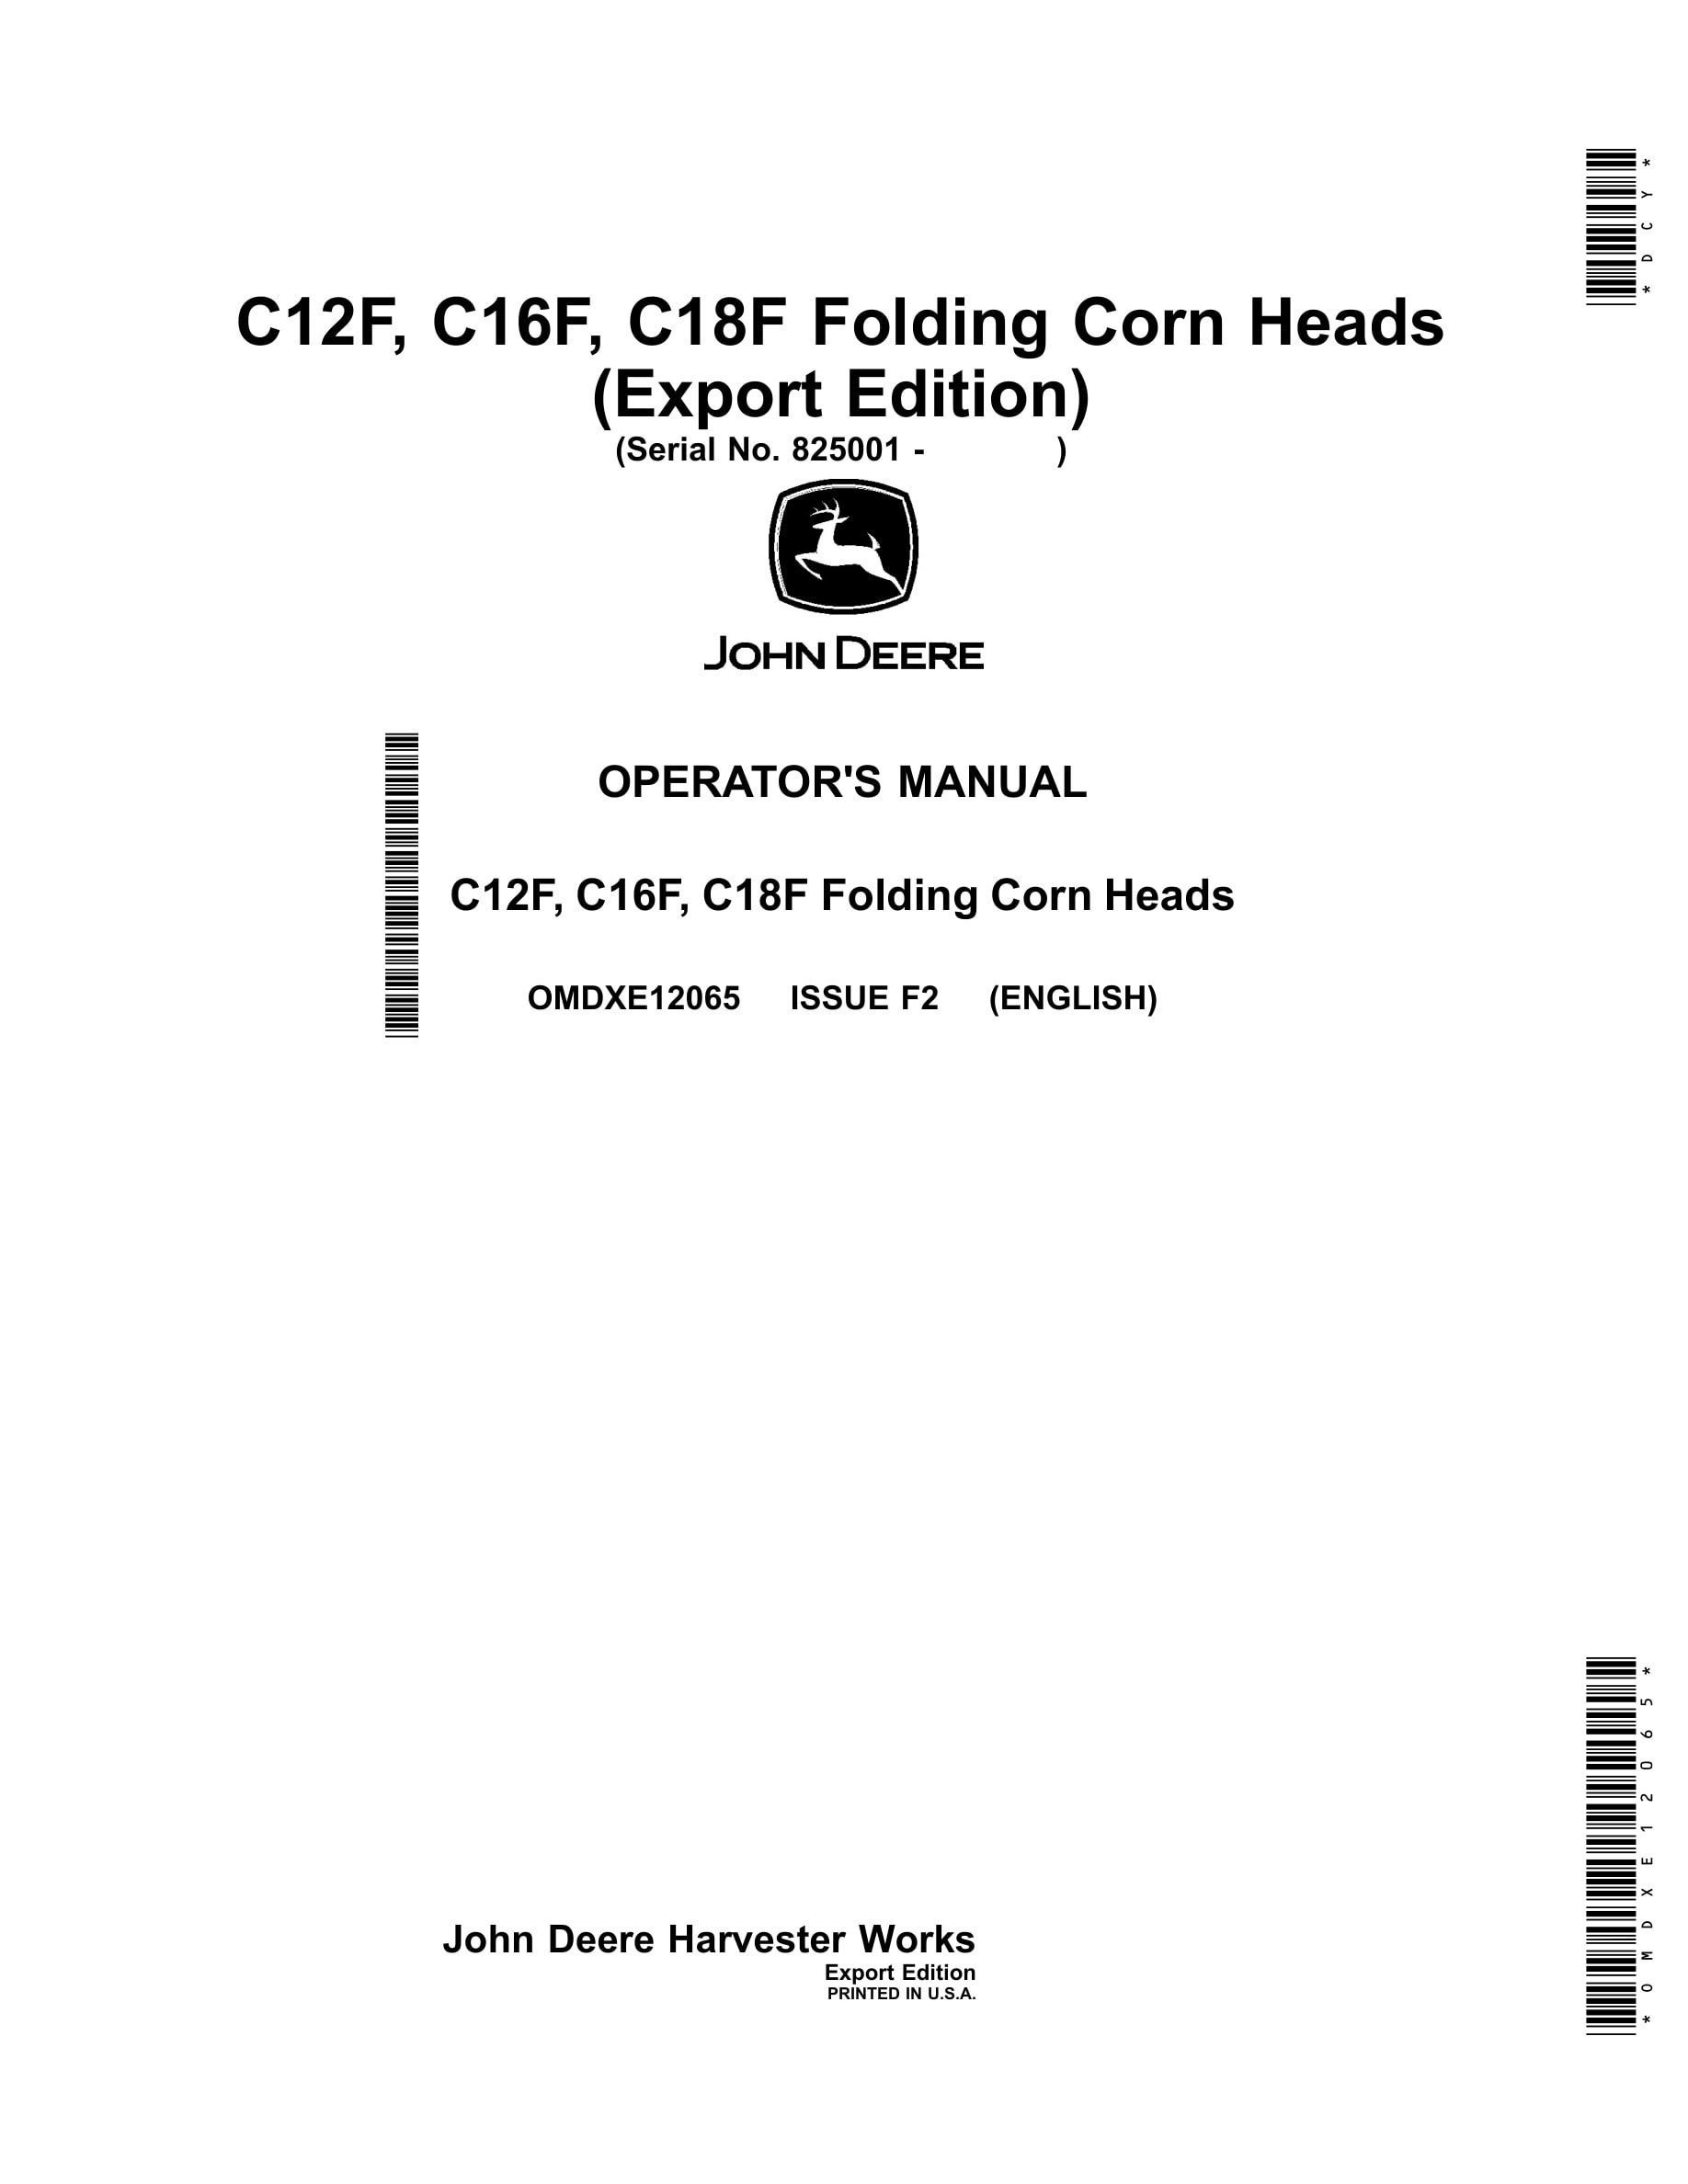 John Deere C12F, C16F, C18F Folding Corn Heads Operator Manual OMDXE12065-1